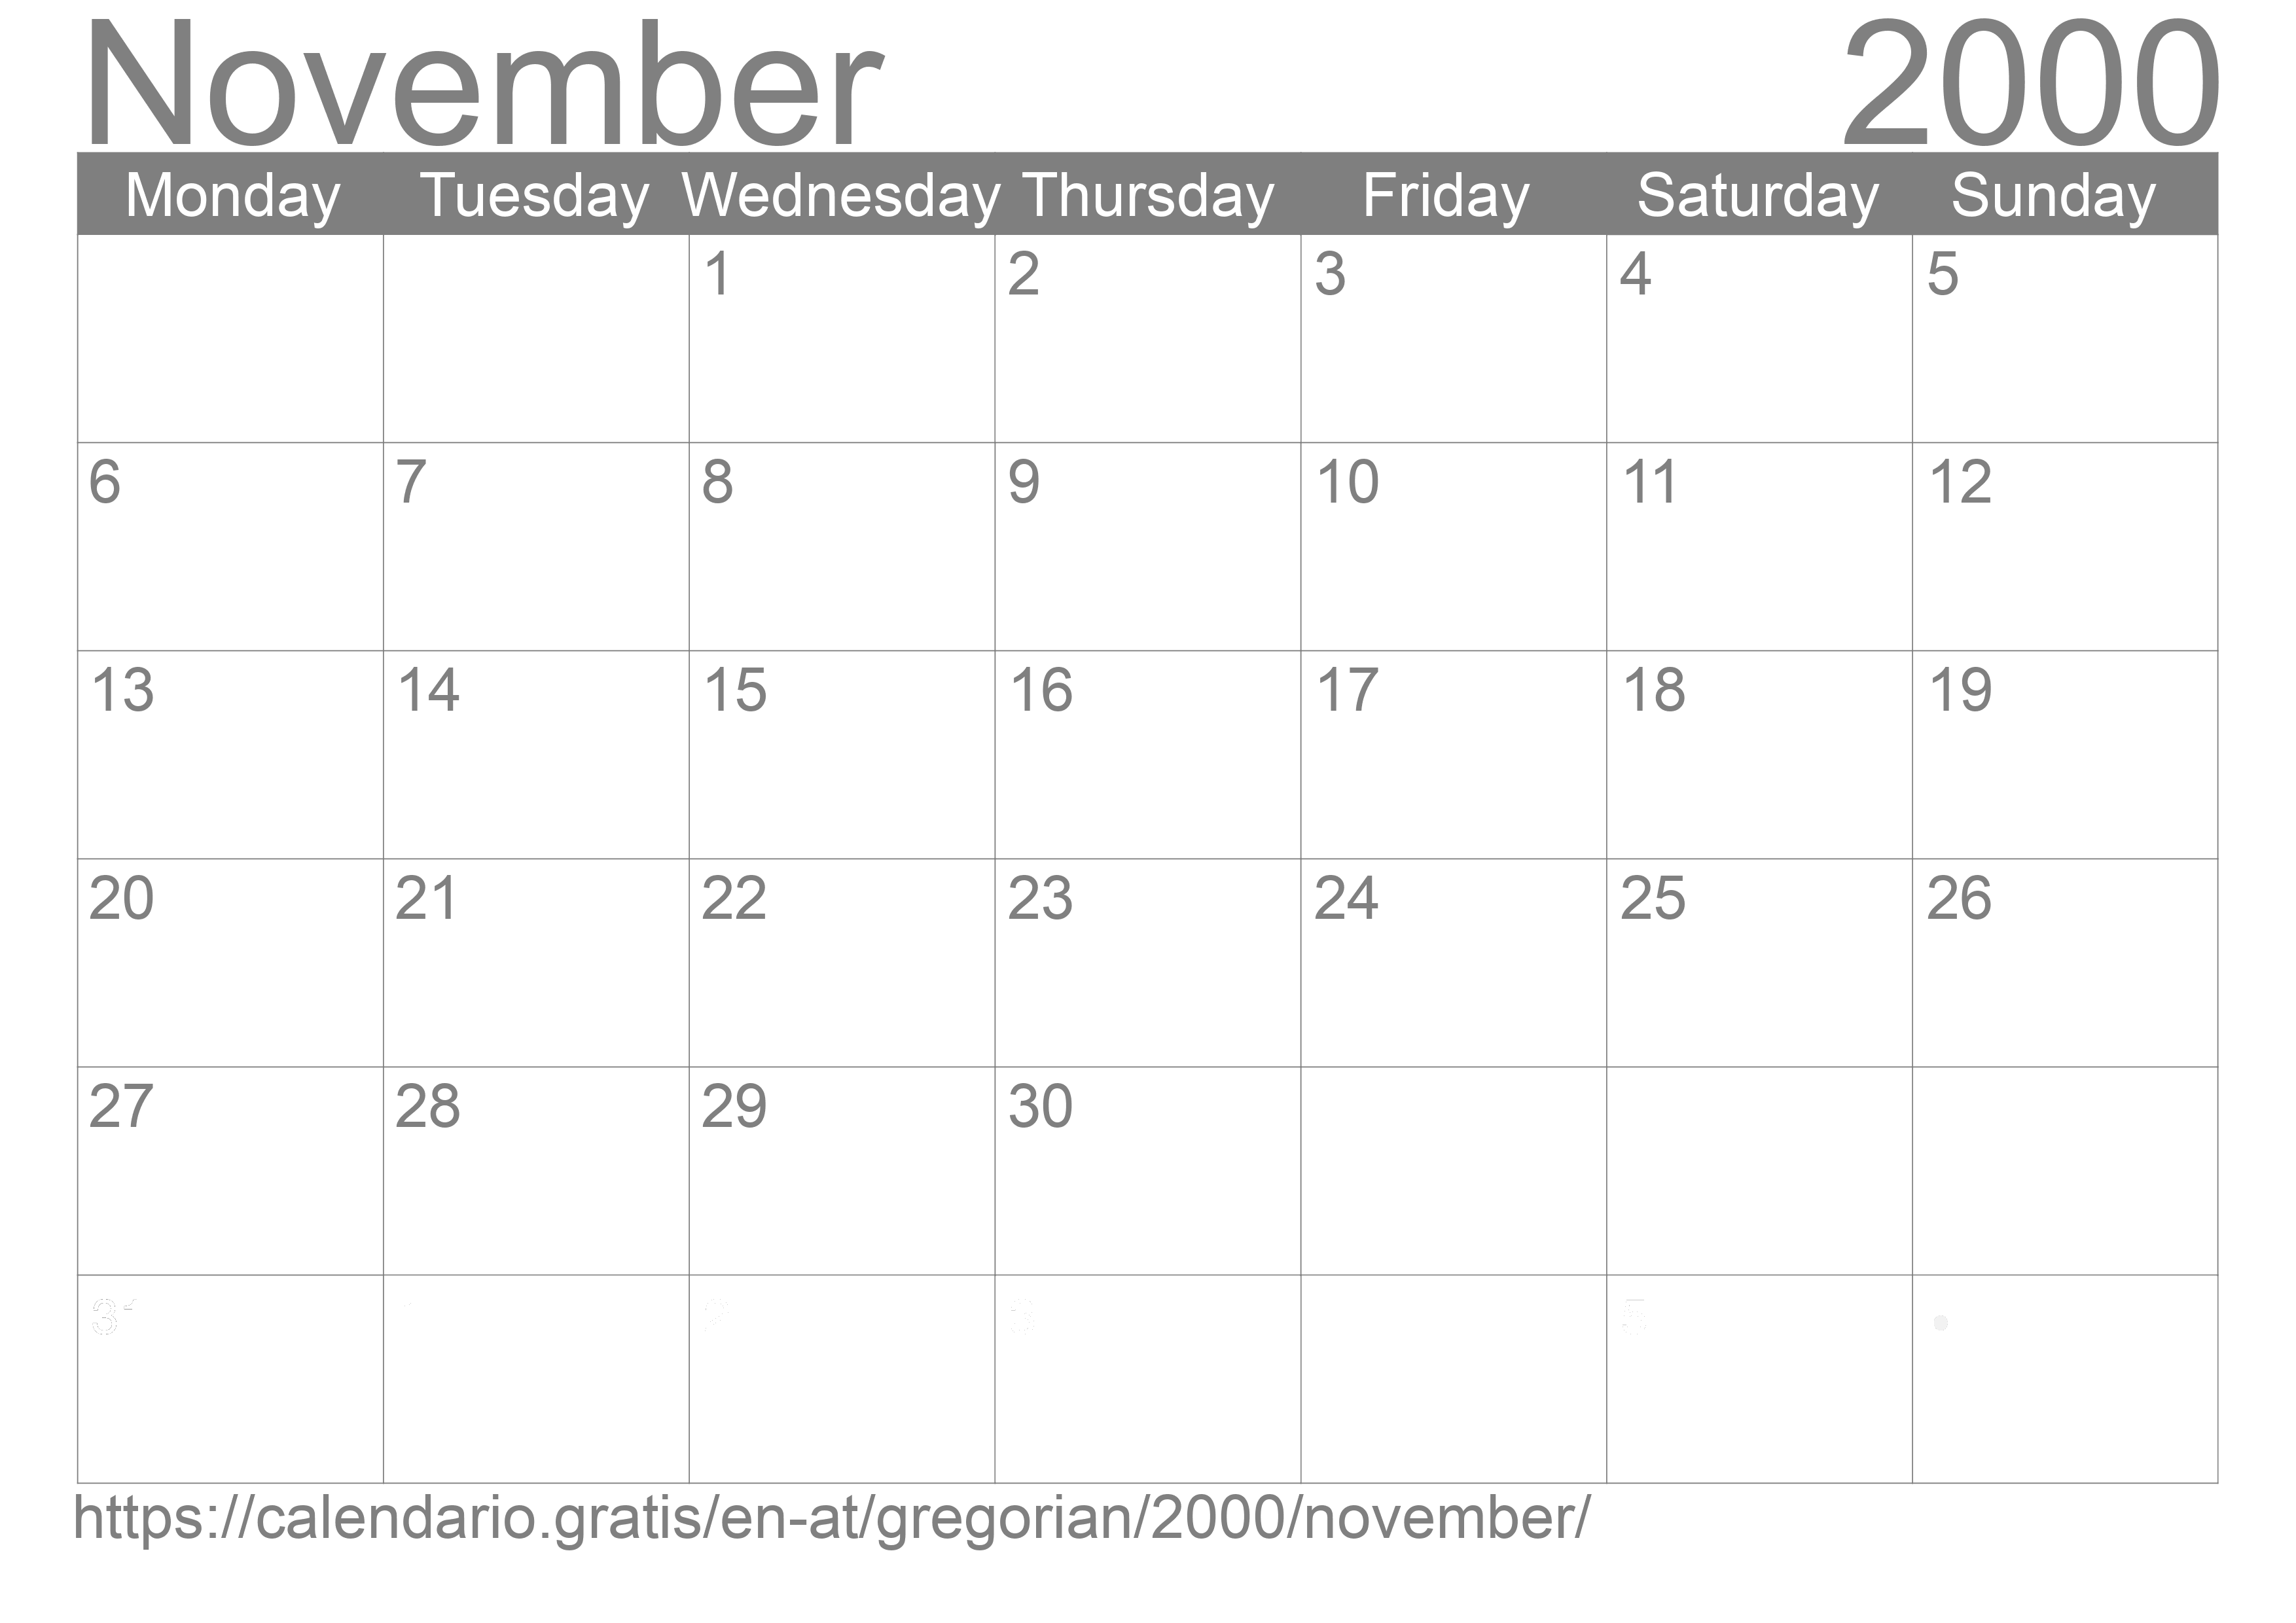 Calendar November 2000 to print